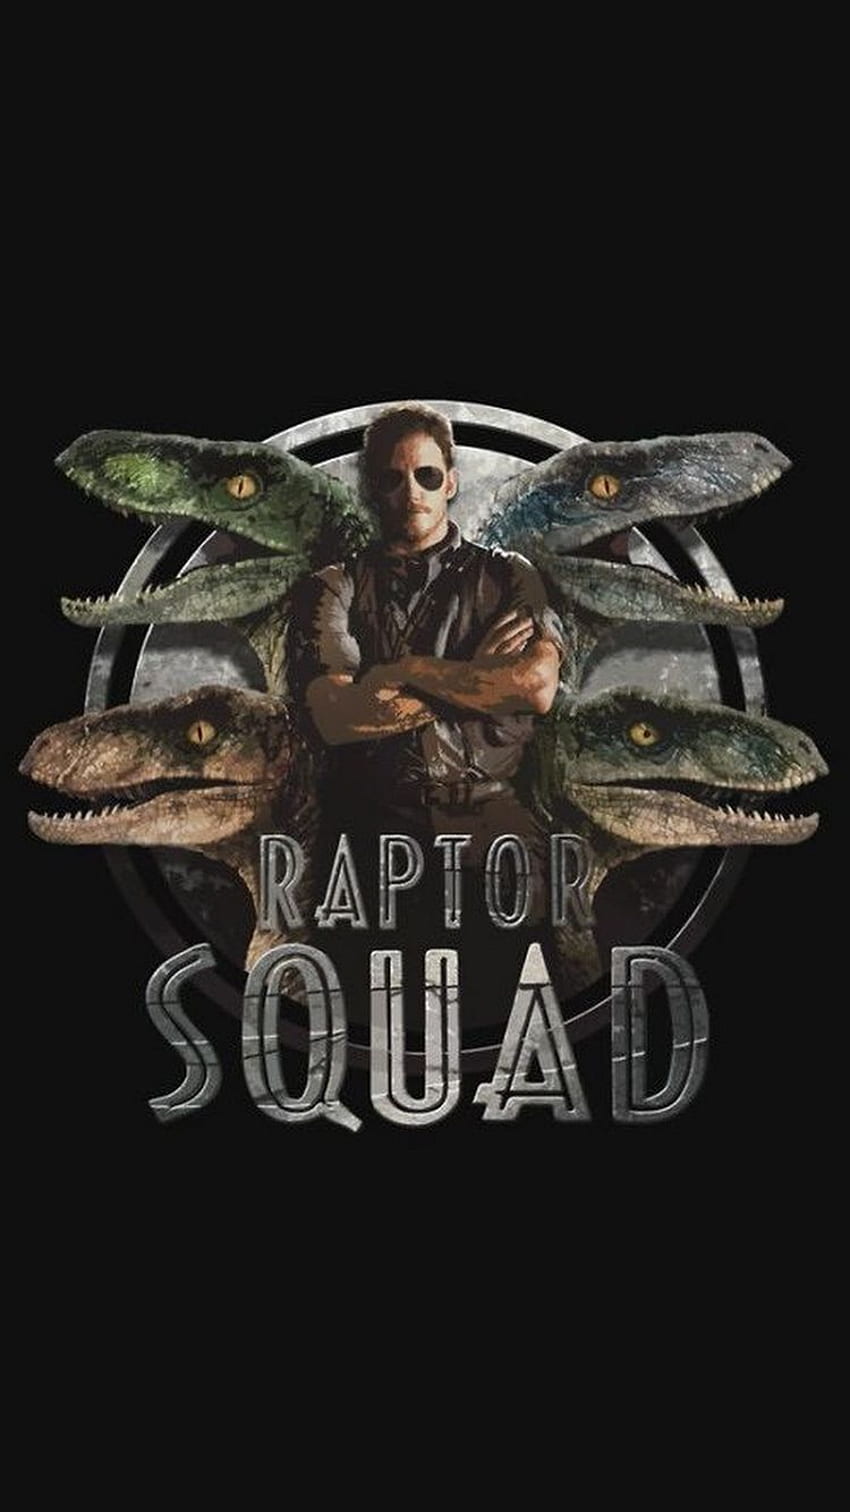 Raptor Squad - iPhone 6 . Jurassic world raptors, Jurassic world dinosaurs, Jurassic world characters, Jurassic Park Velociraptor HD phone wallpaper